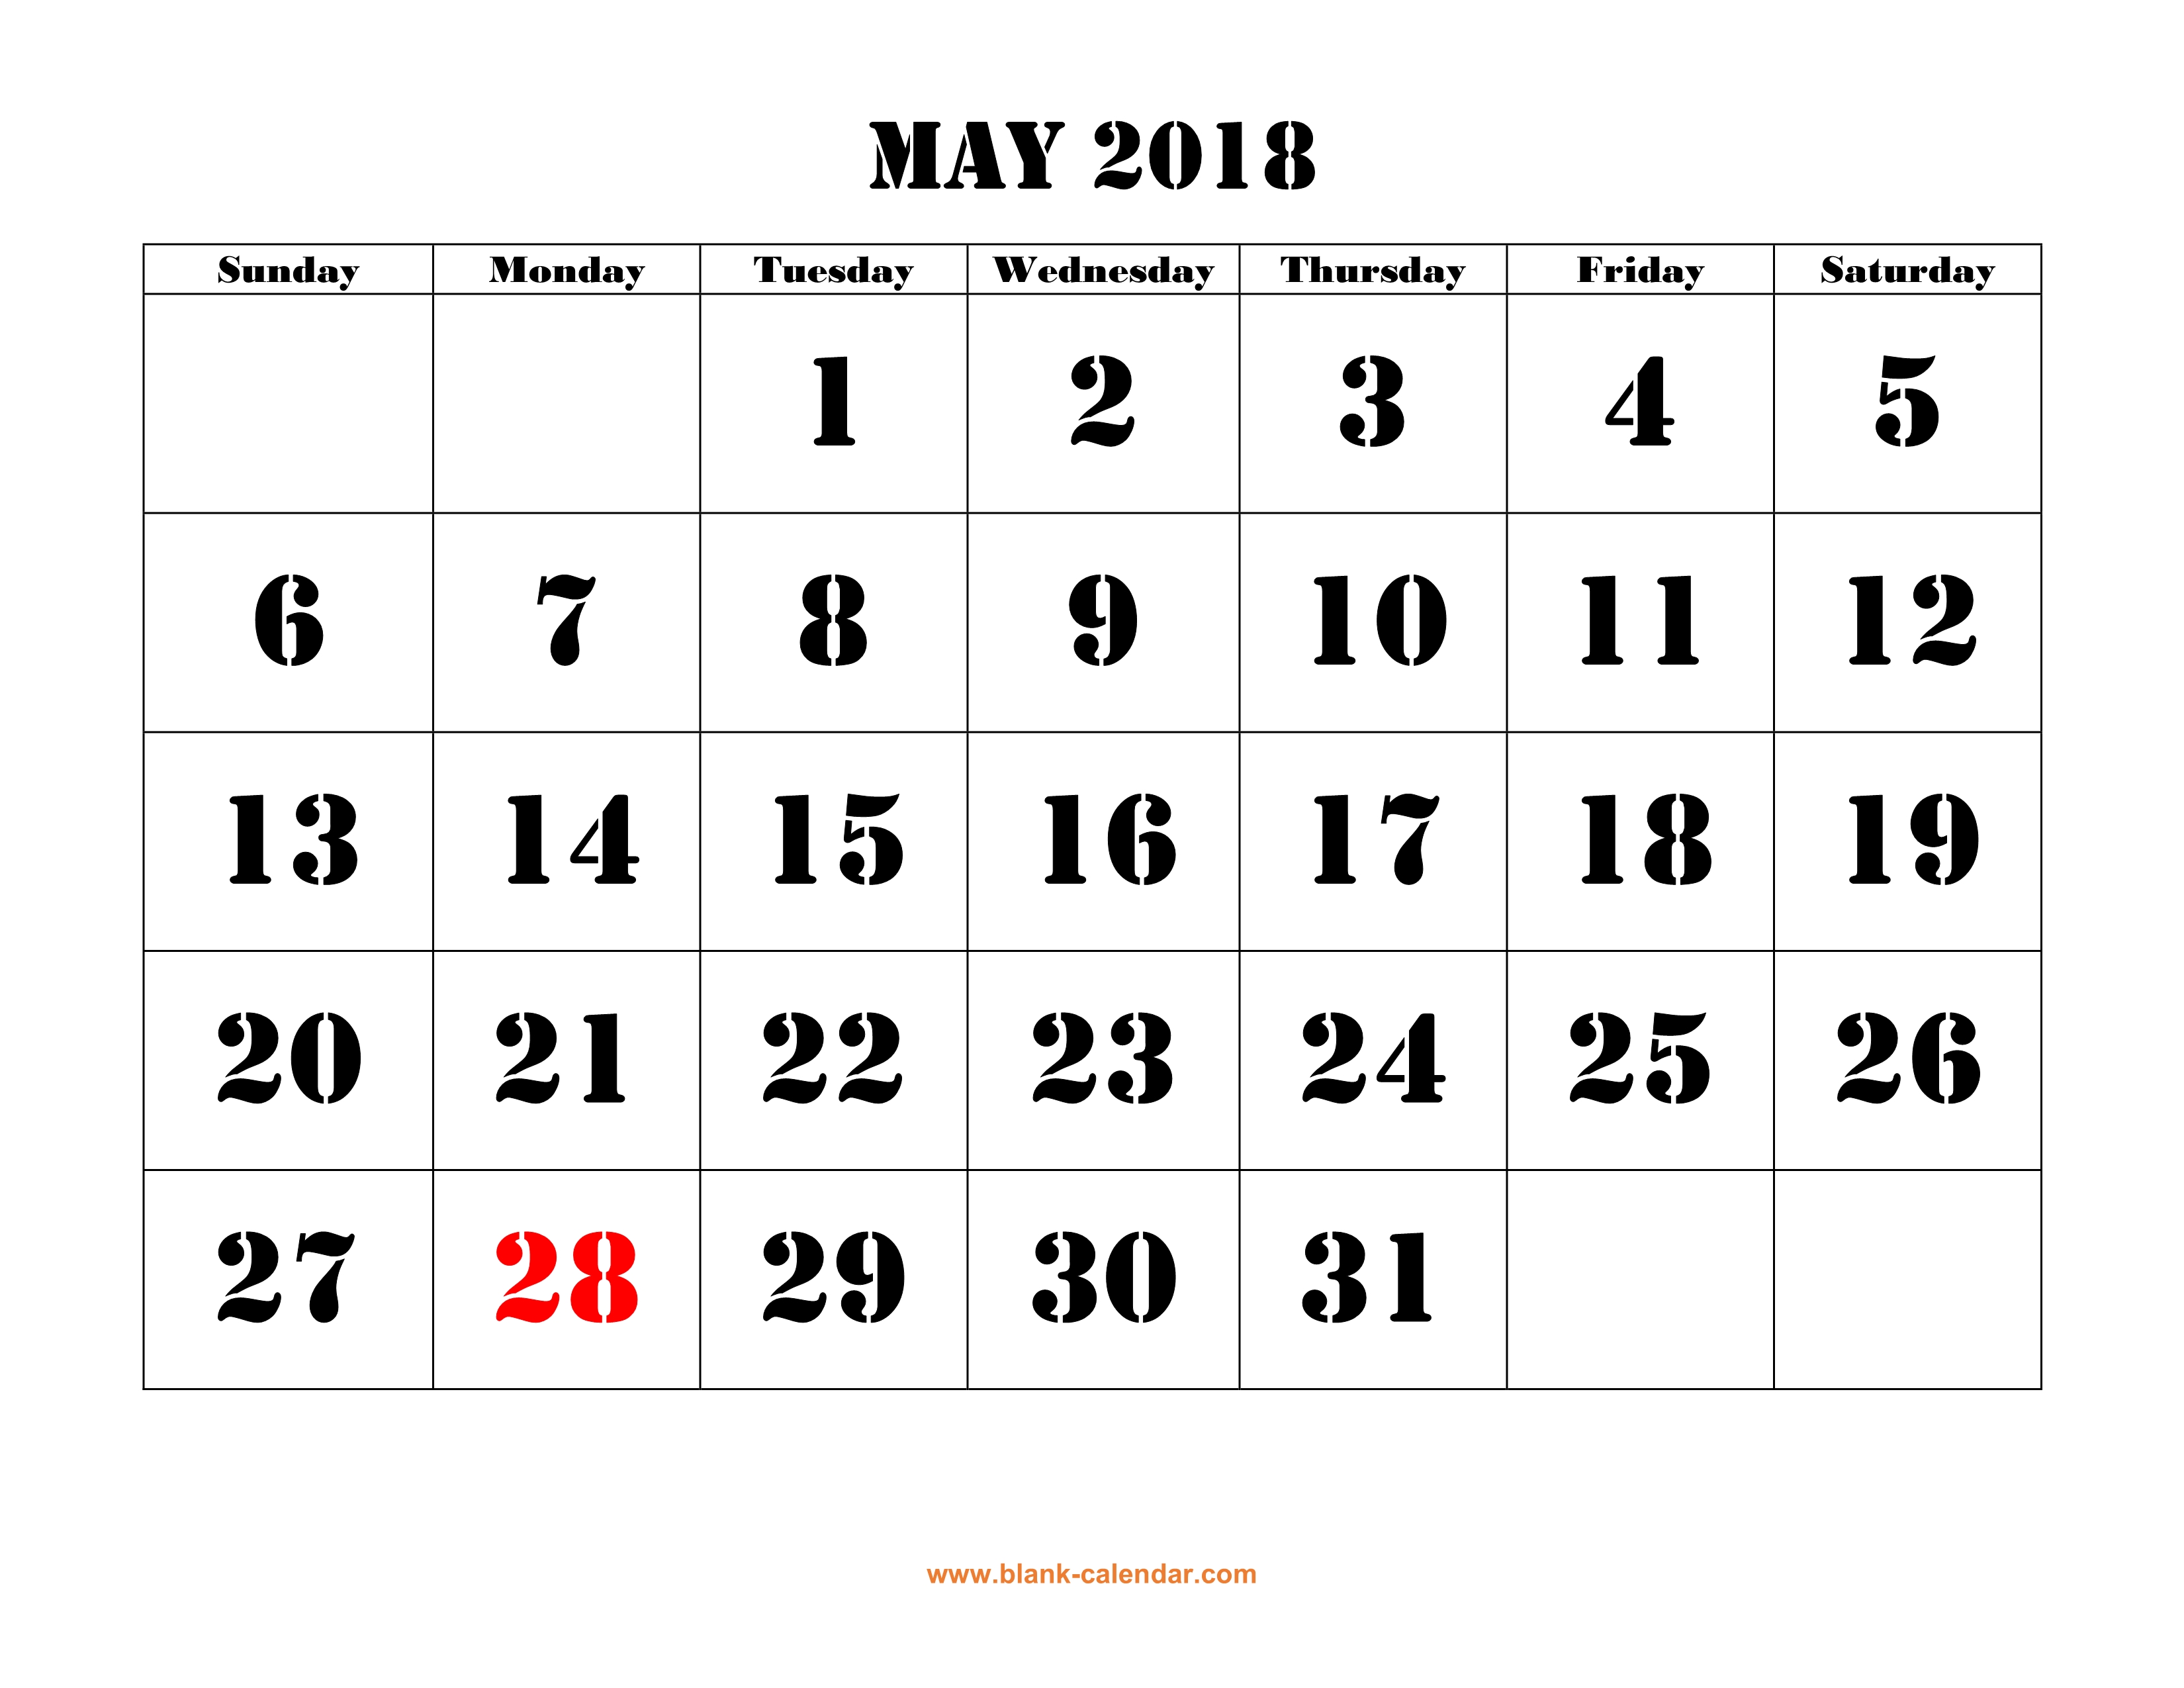 Print May 2018 Calendar